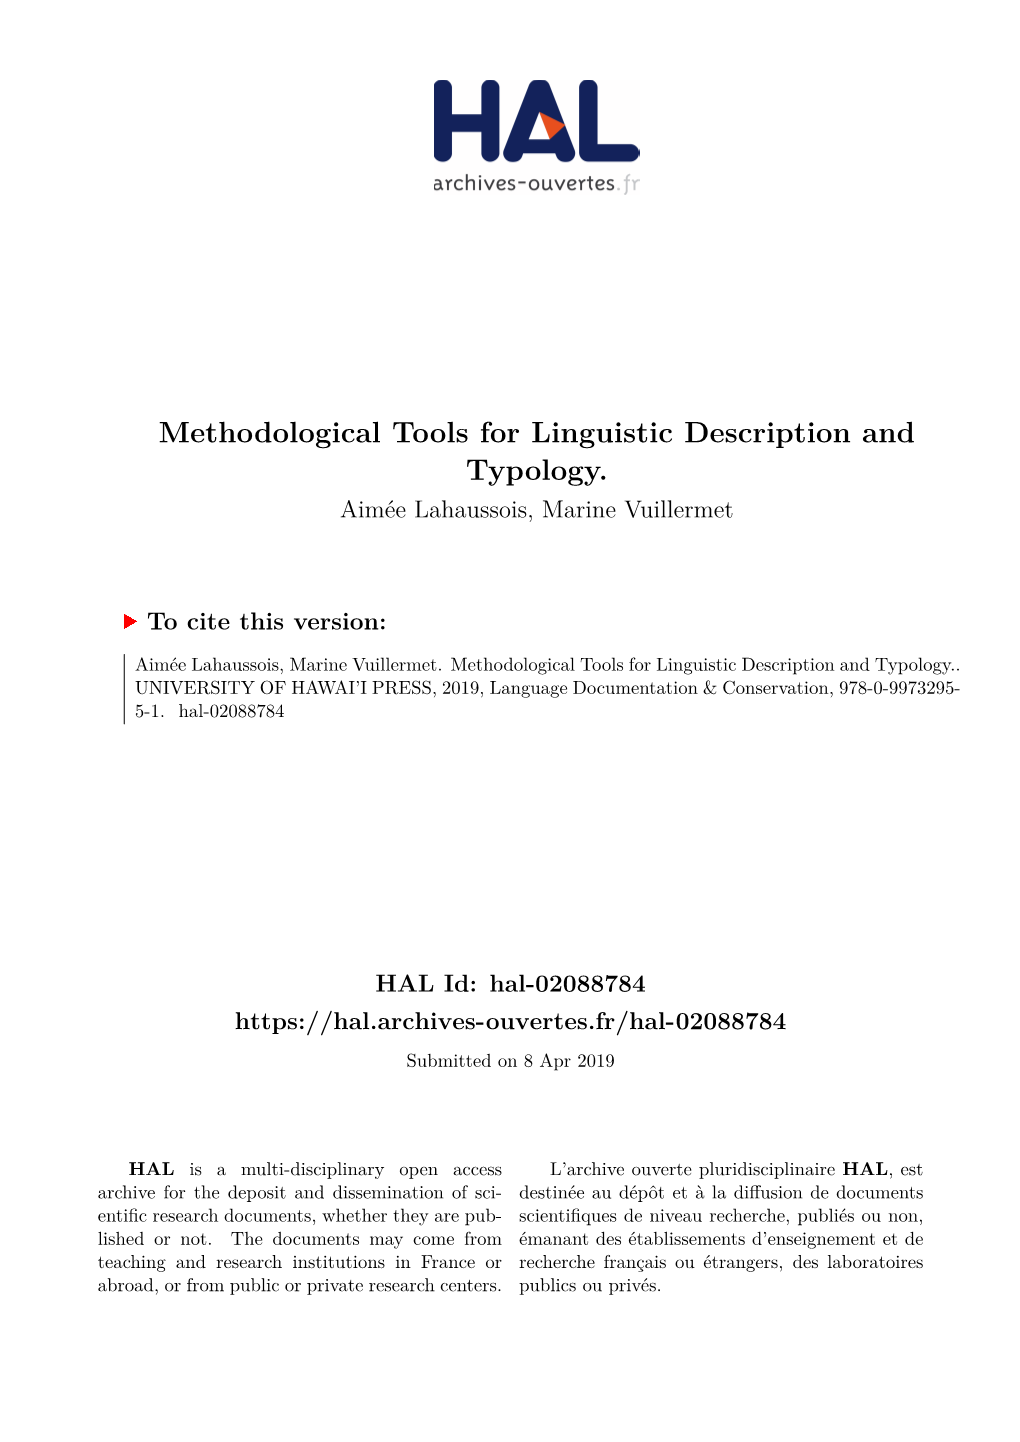 Methodological Tools for Linguistic Description and Typology. Aimée Lahaussois, Marine Vuillermet